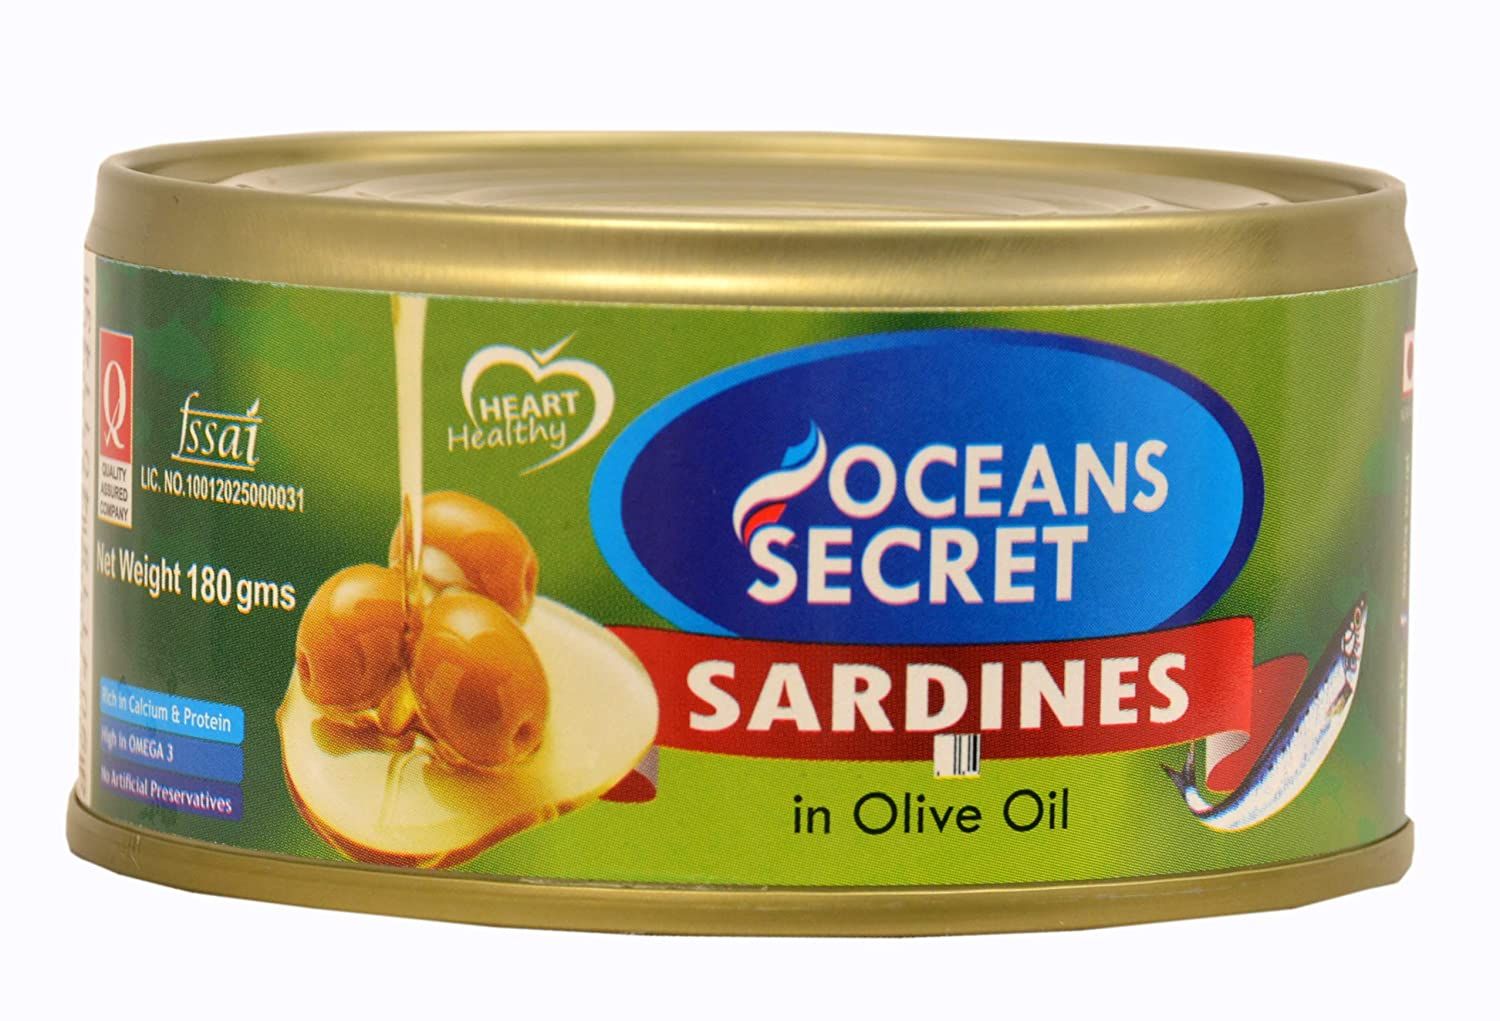 Ocean's Secret Sardines in Olive Oil Image